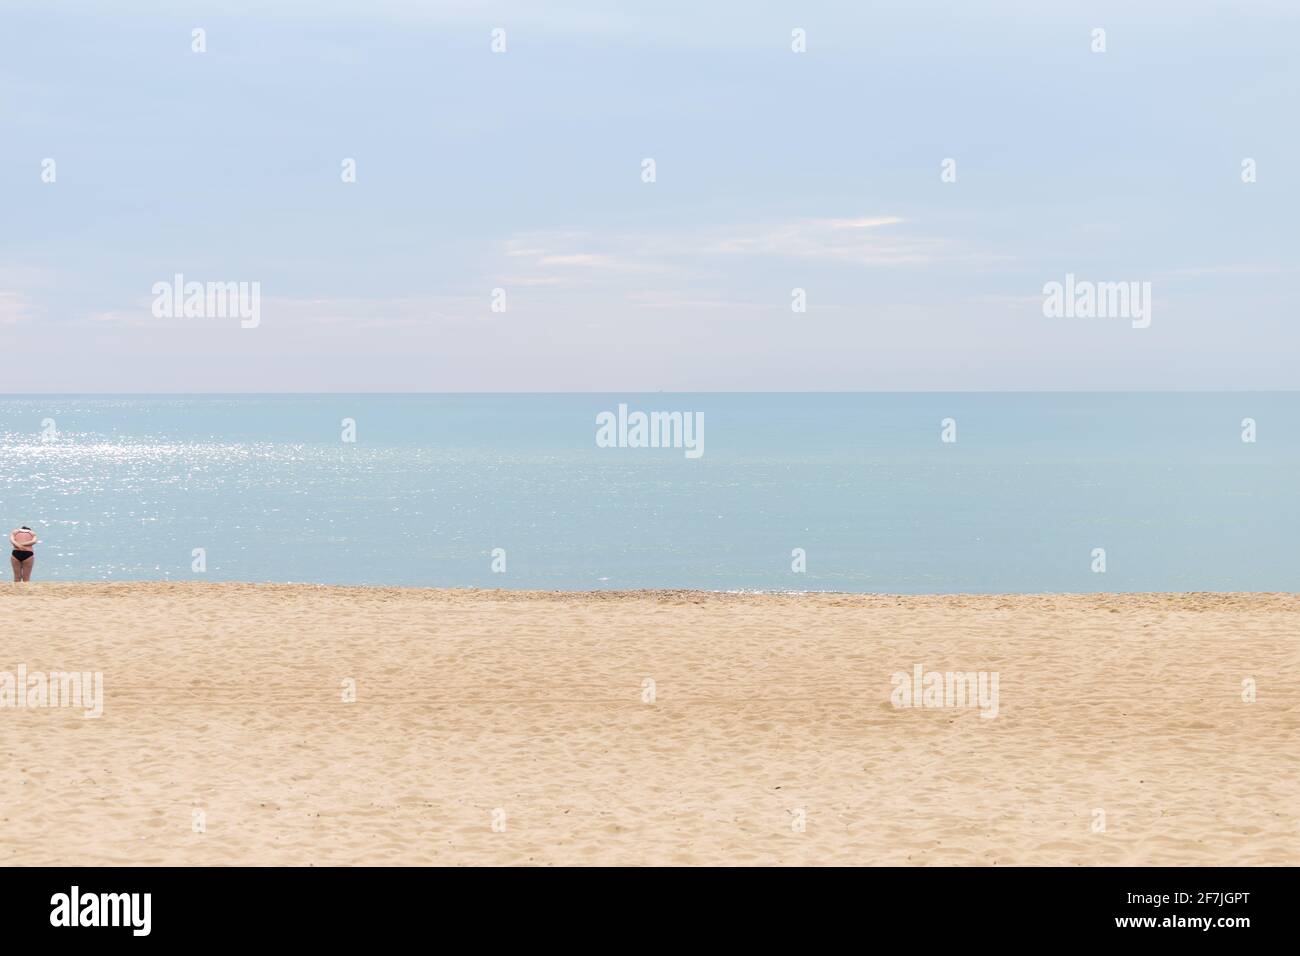 Minimalism photo. Beach, sky and sea line. One woman in sea cloth. Stock Photo